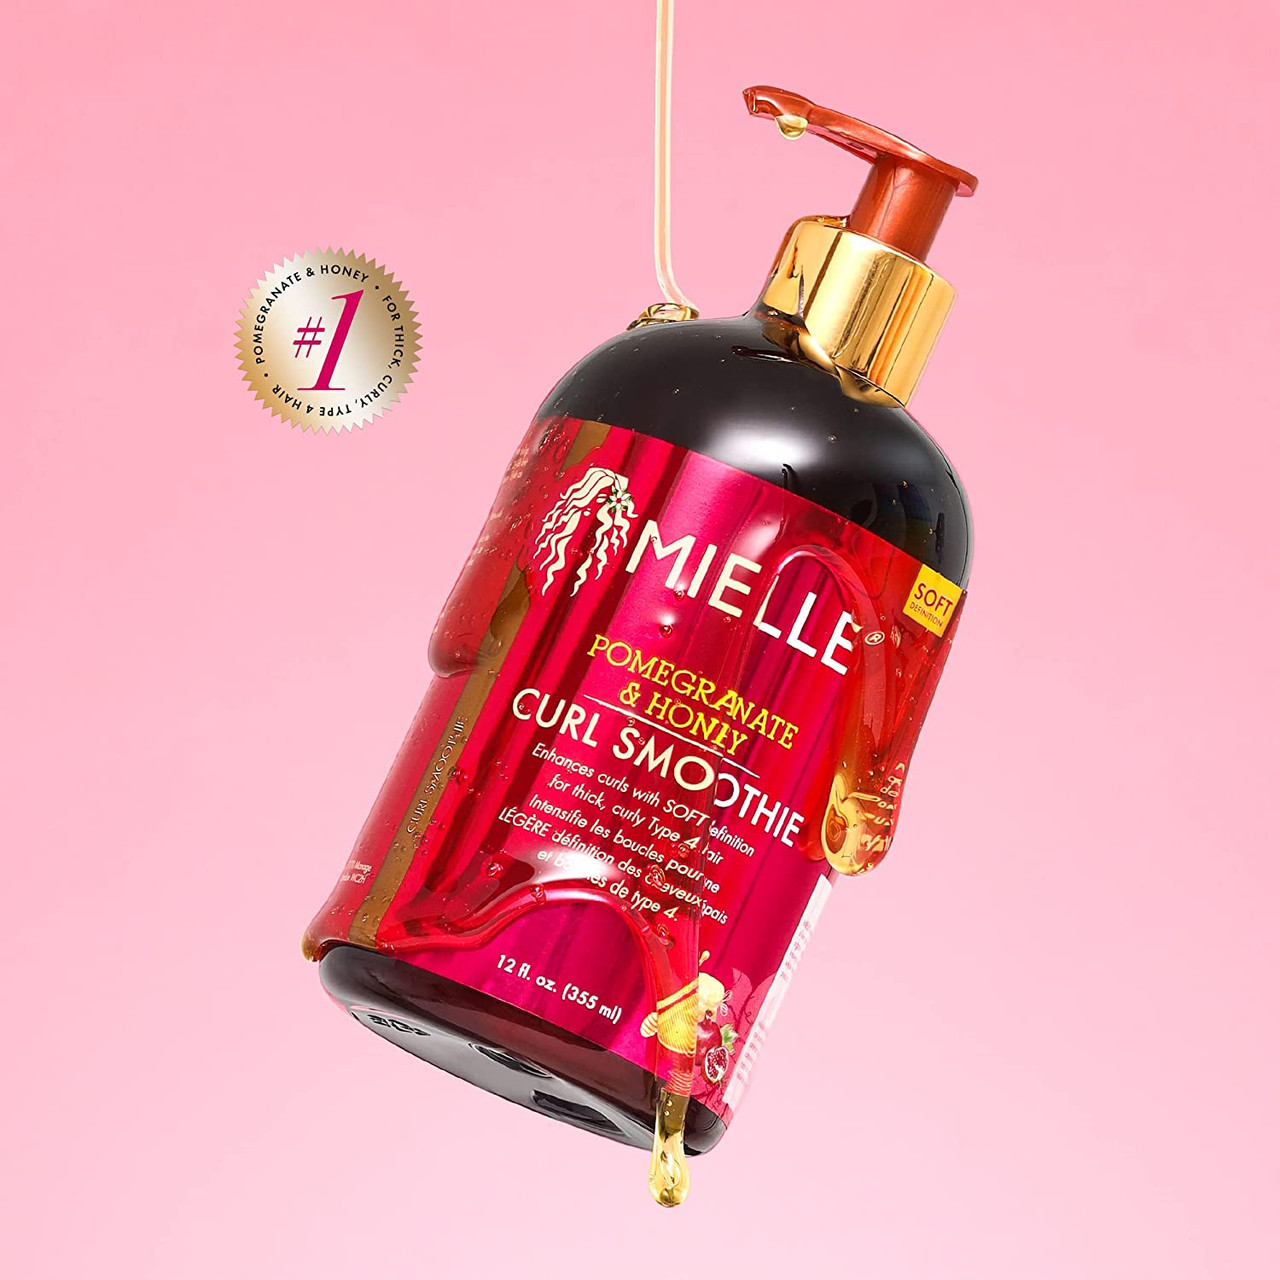 Mielle Curl Smoothie, Pomegranate & Honey - 12 fl oz